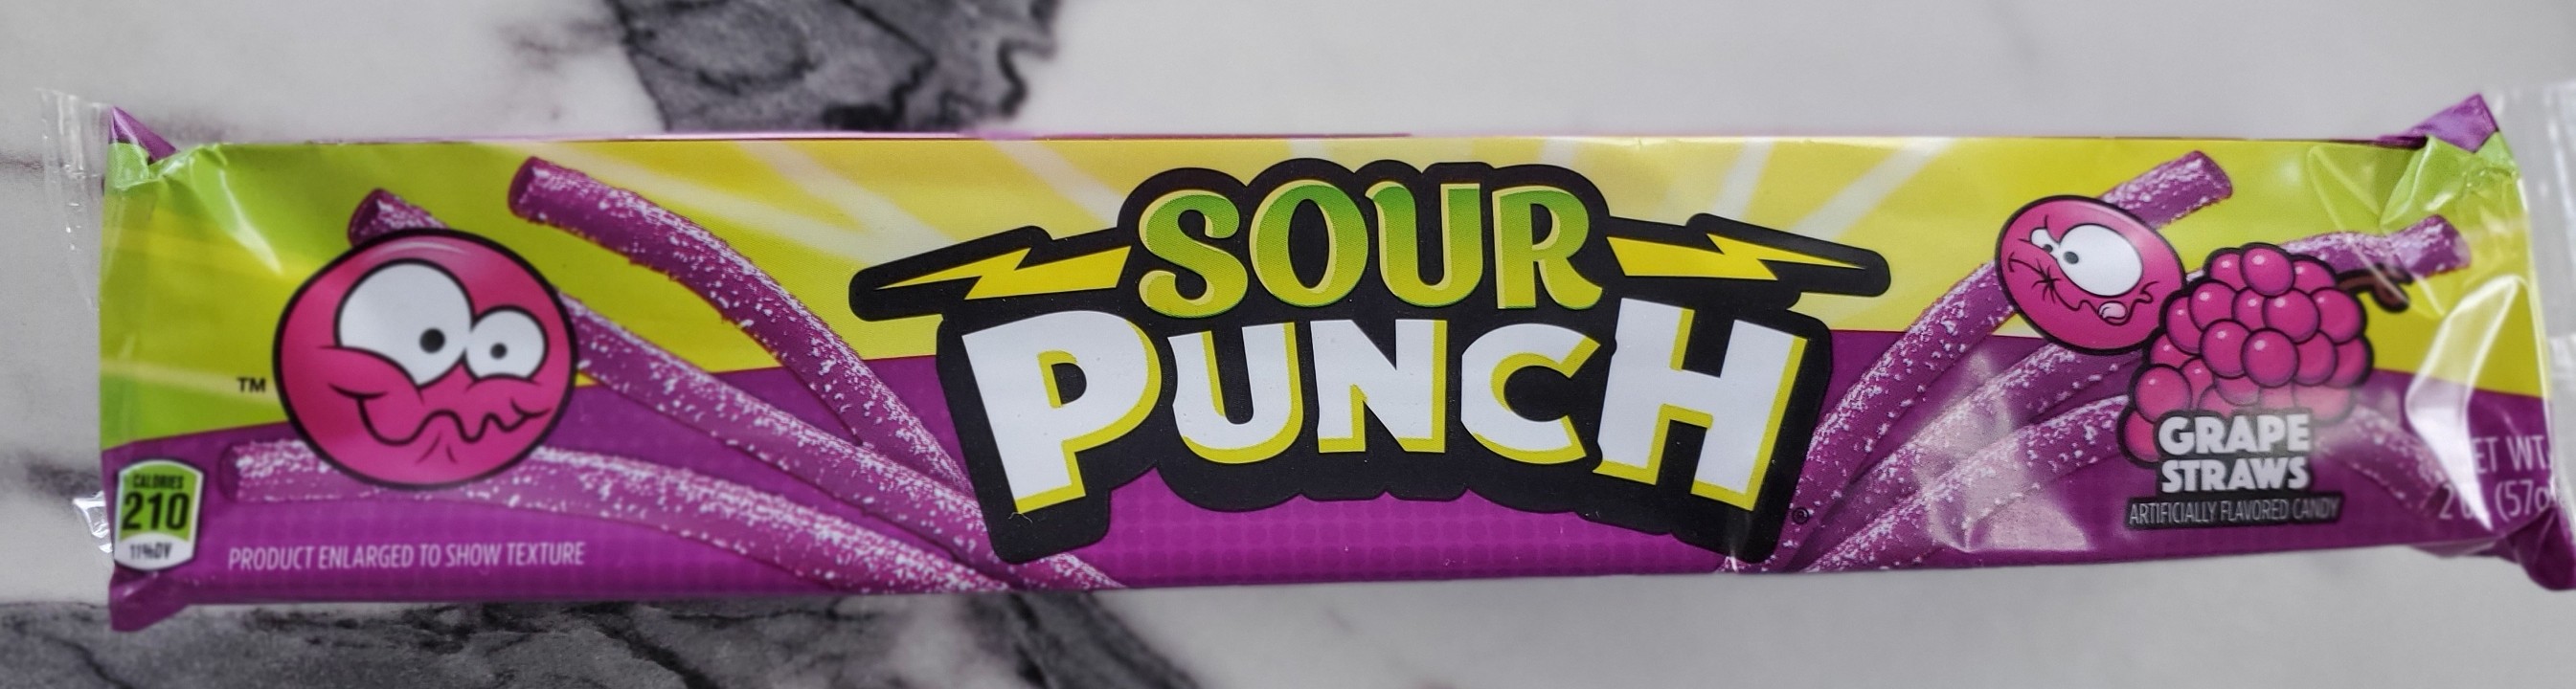 Sour Punch Grape Straws